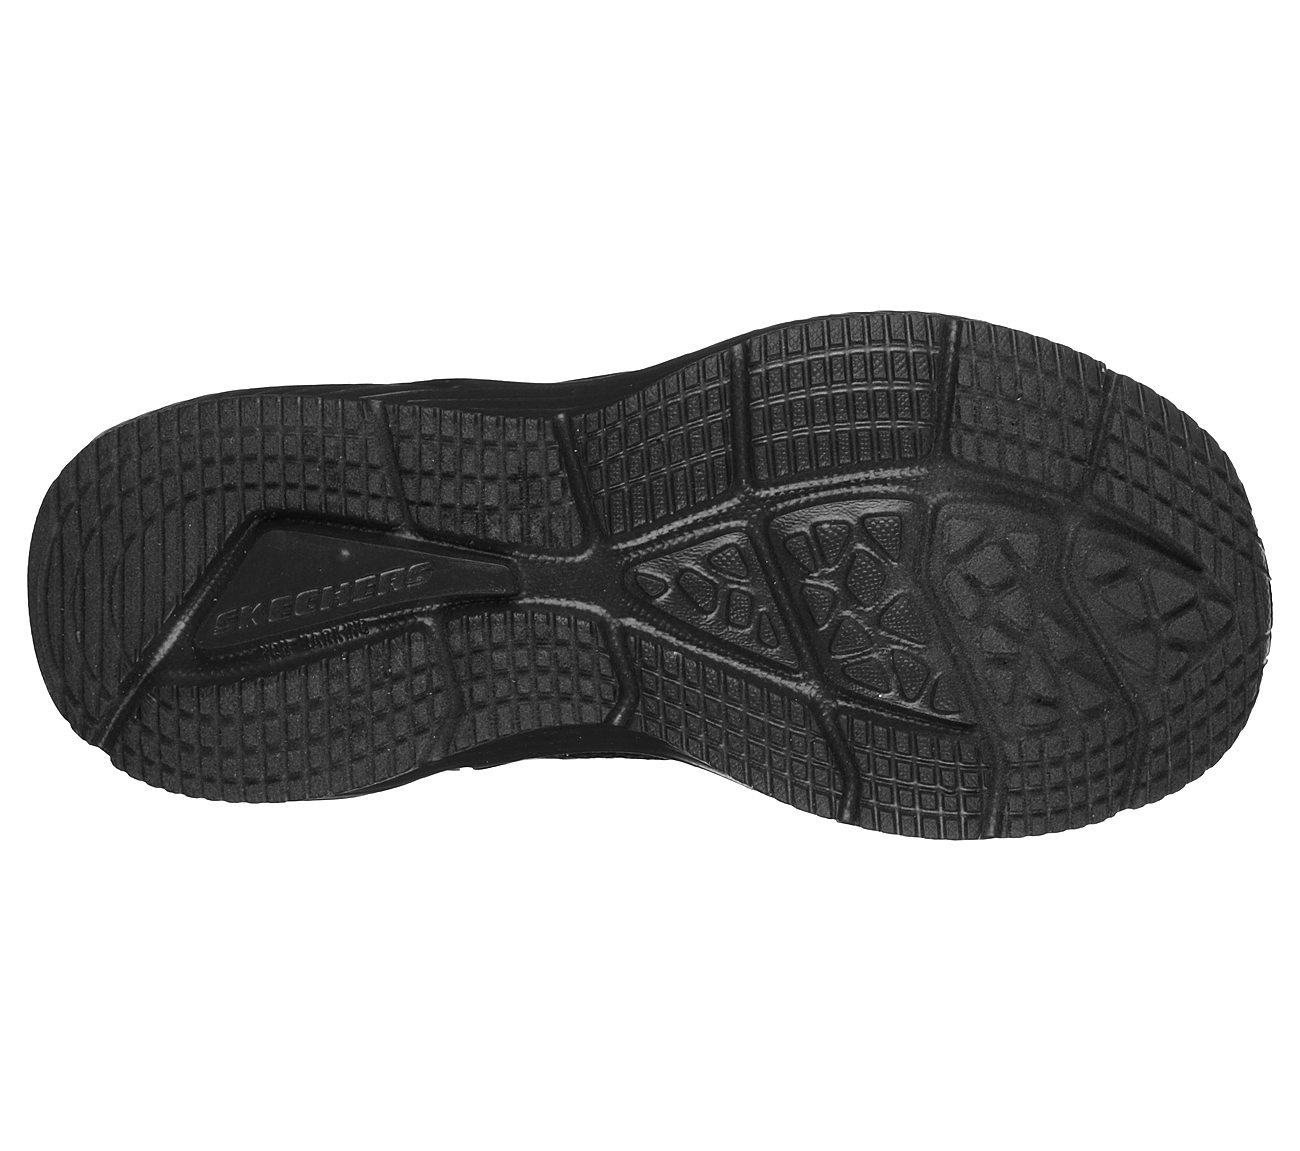 DYNA-AIR - QUICK PULSE, BLACK/ORANGE Footwear Bottom View